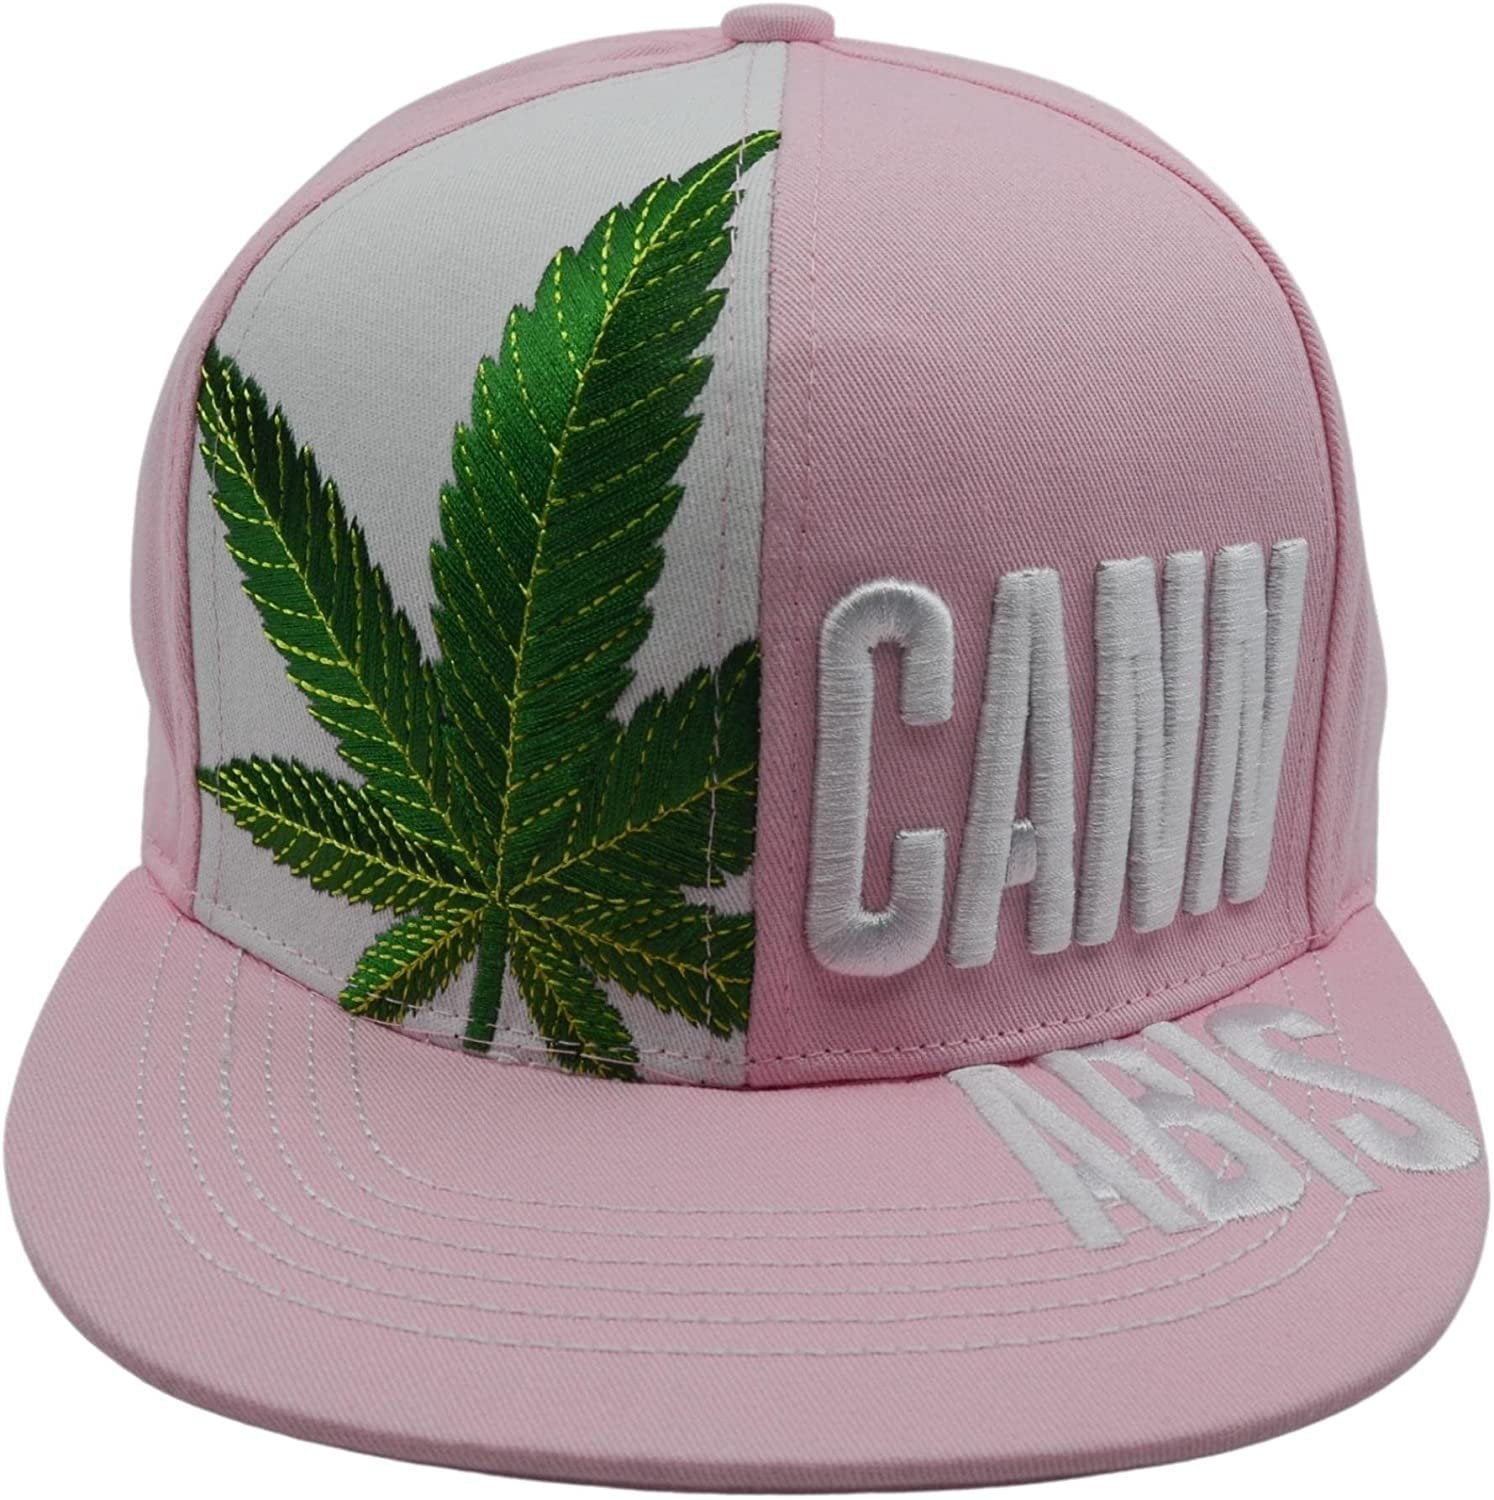 Super Star Snakeskin Hip Hop Bling Unisex Sombreros para niños y niñas,A Snapback Hiphop Cap Cannabis Marihuana Weed Leaf Flat Peak Gorras de béisbol 